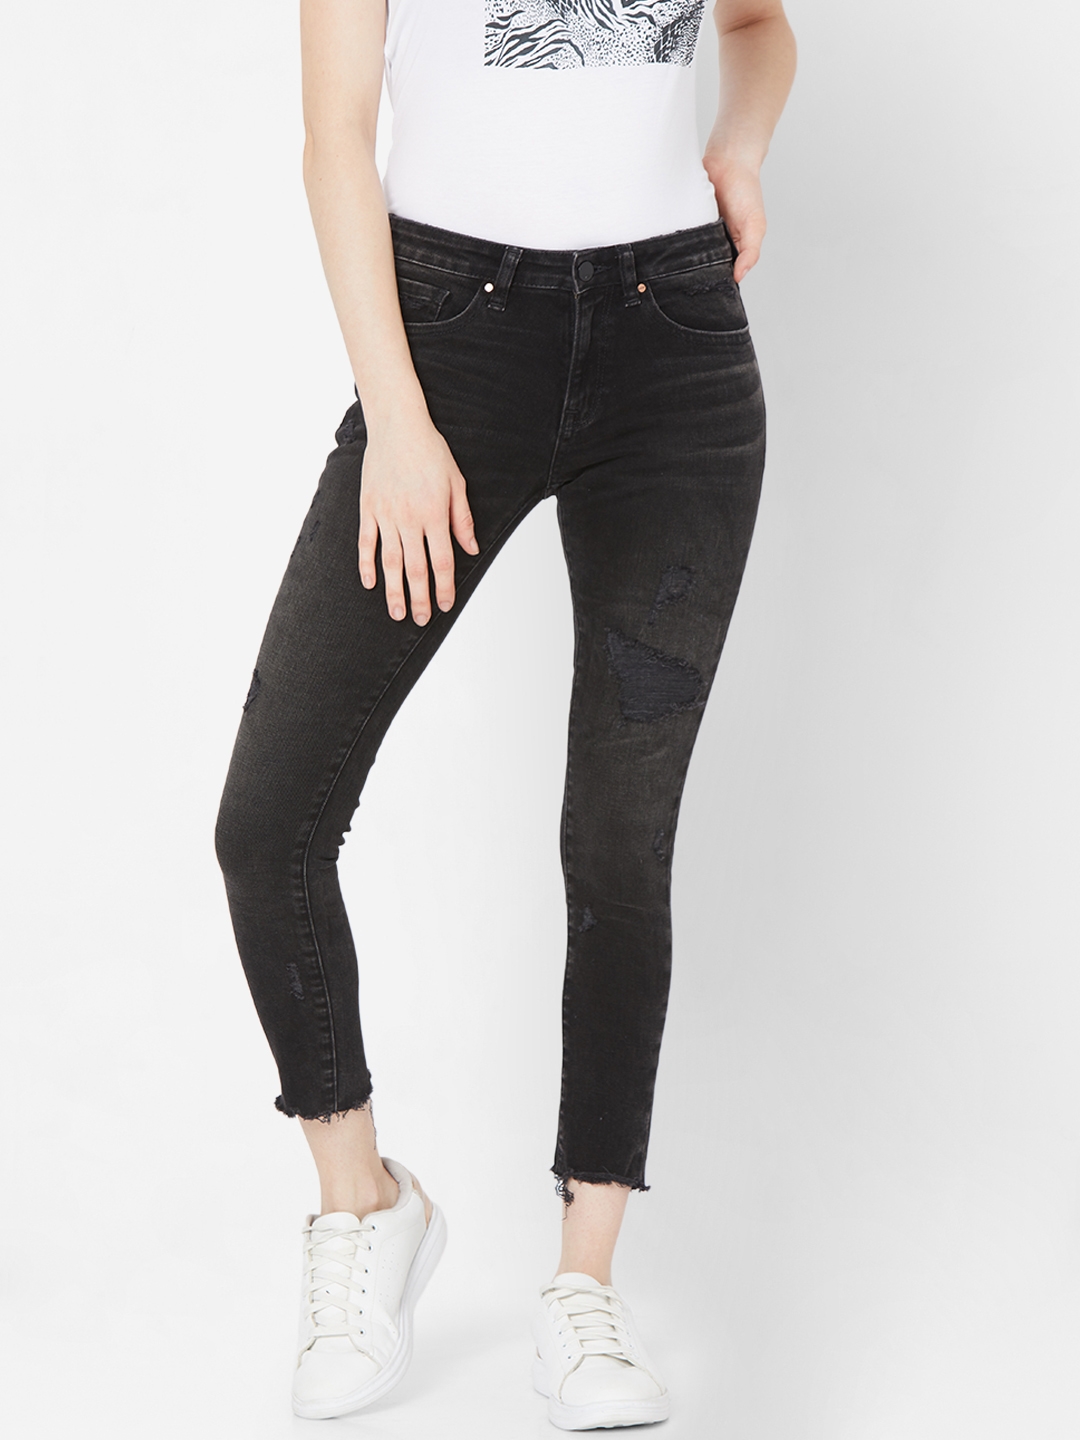 Women's Black Lycra Solid Ripped Jeans